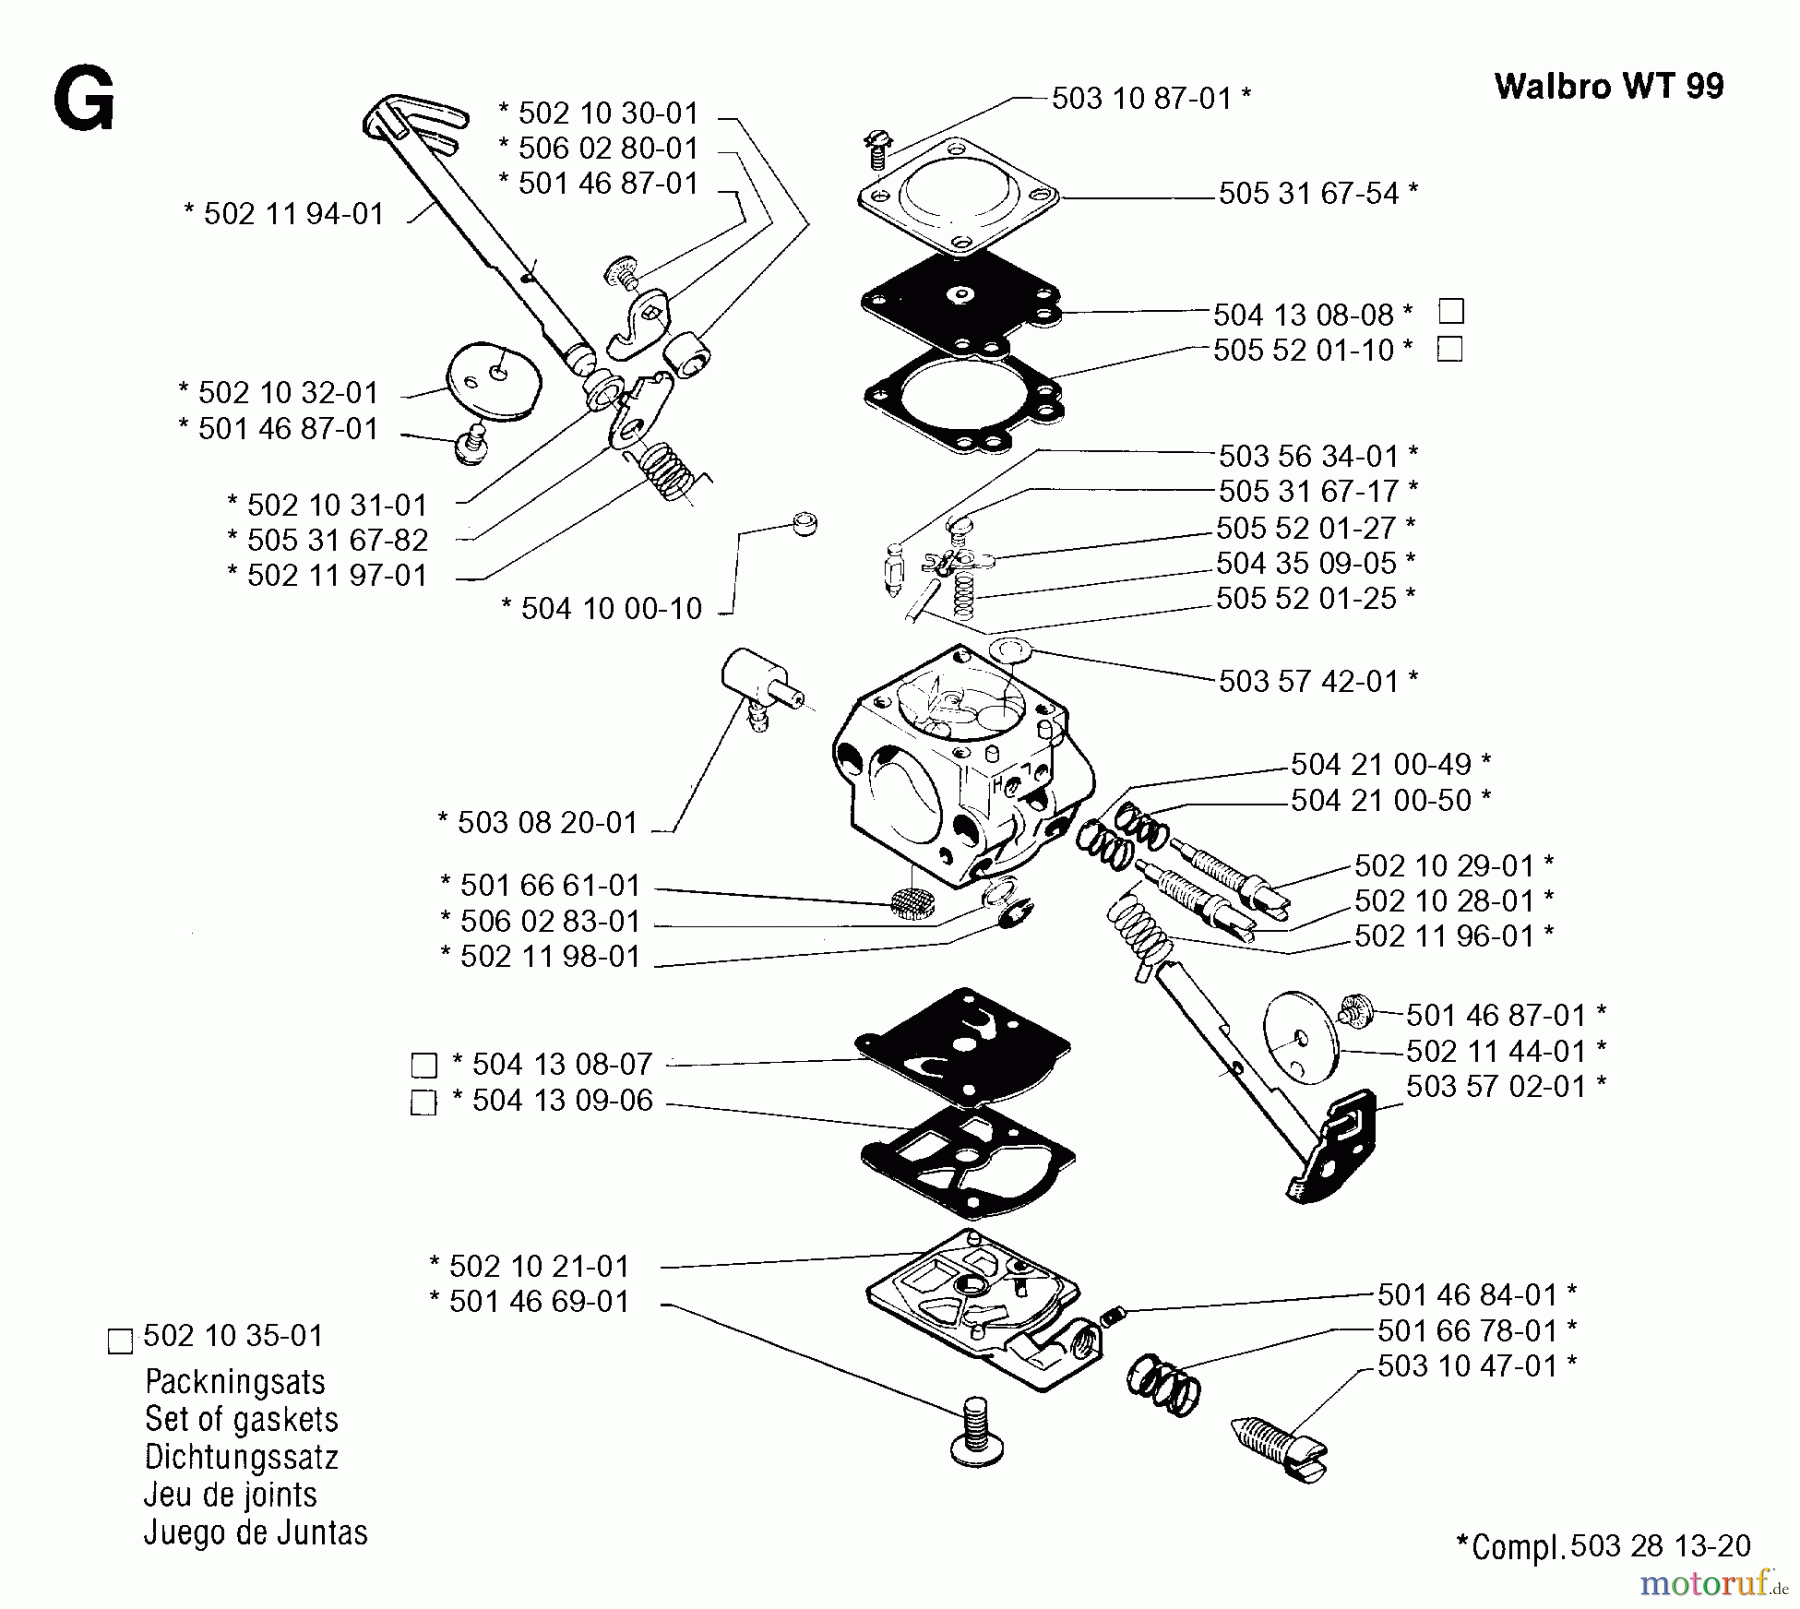  Jonsered Motorsensen, Trimmer GR50 - Jonsered String/Brush Trimmer (1995-01) CARBURETOR DETAILS